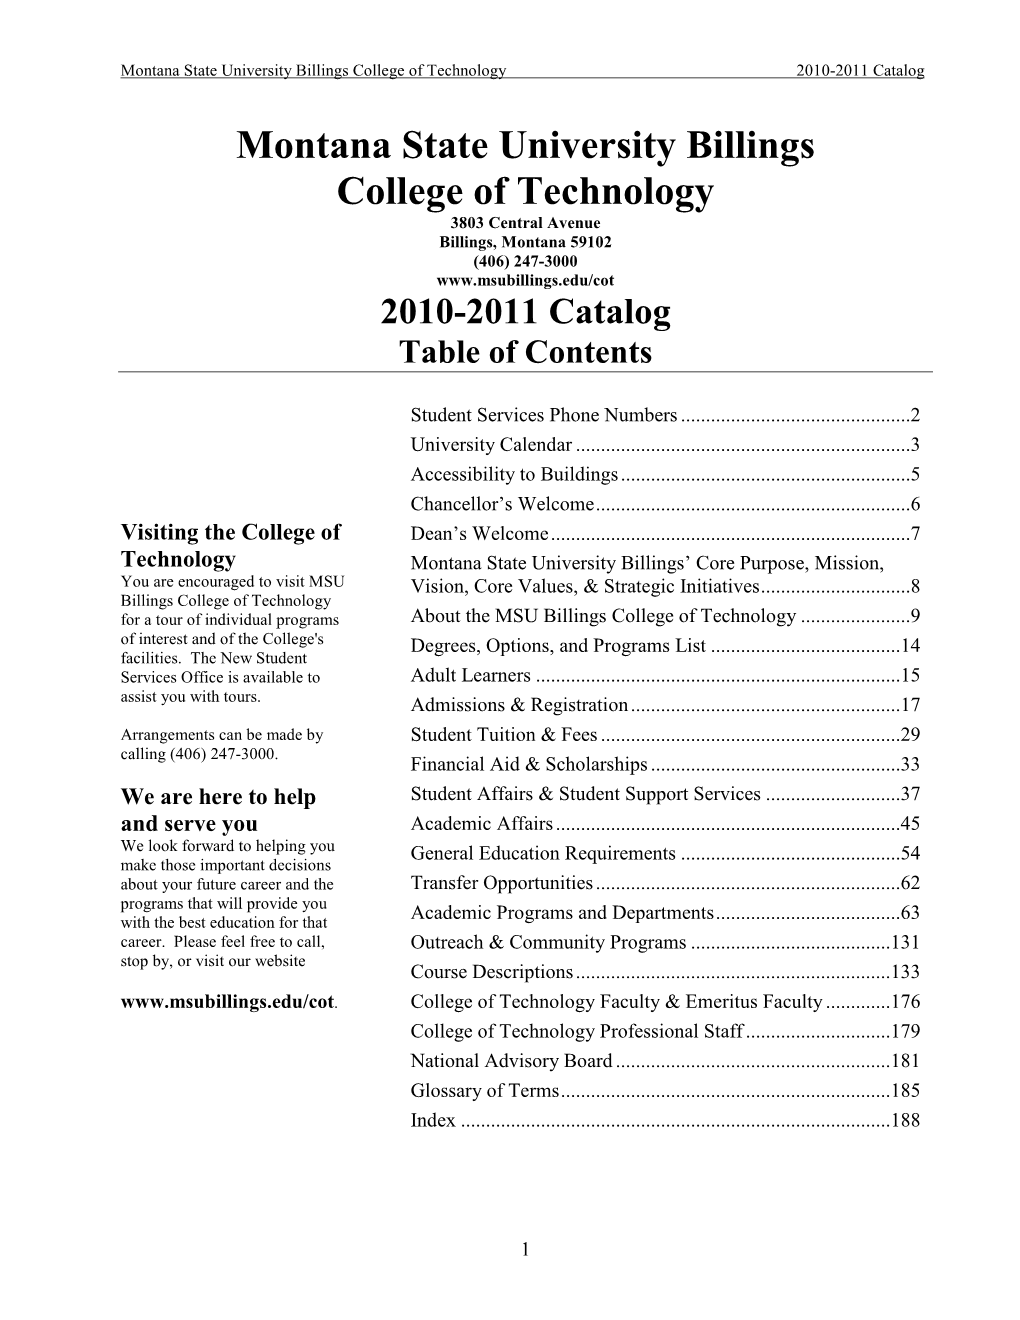 Montana State University Billings College of Technology 2010-2011 Catalog